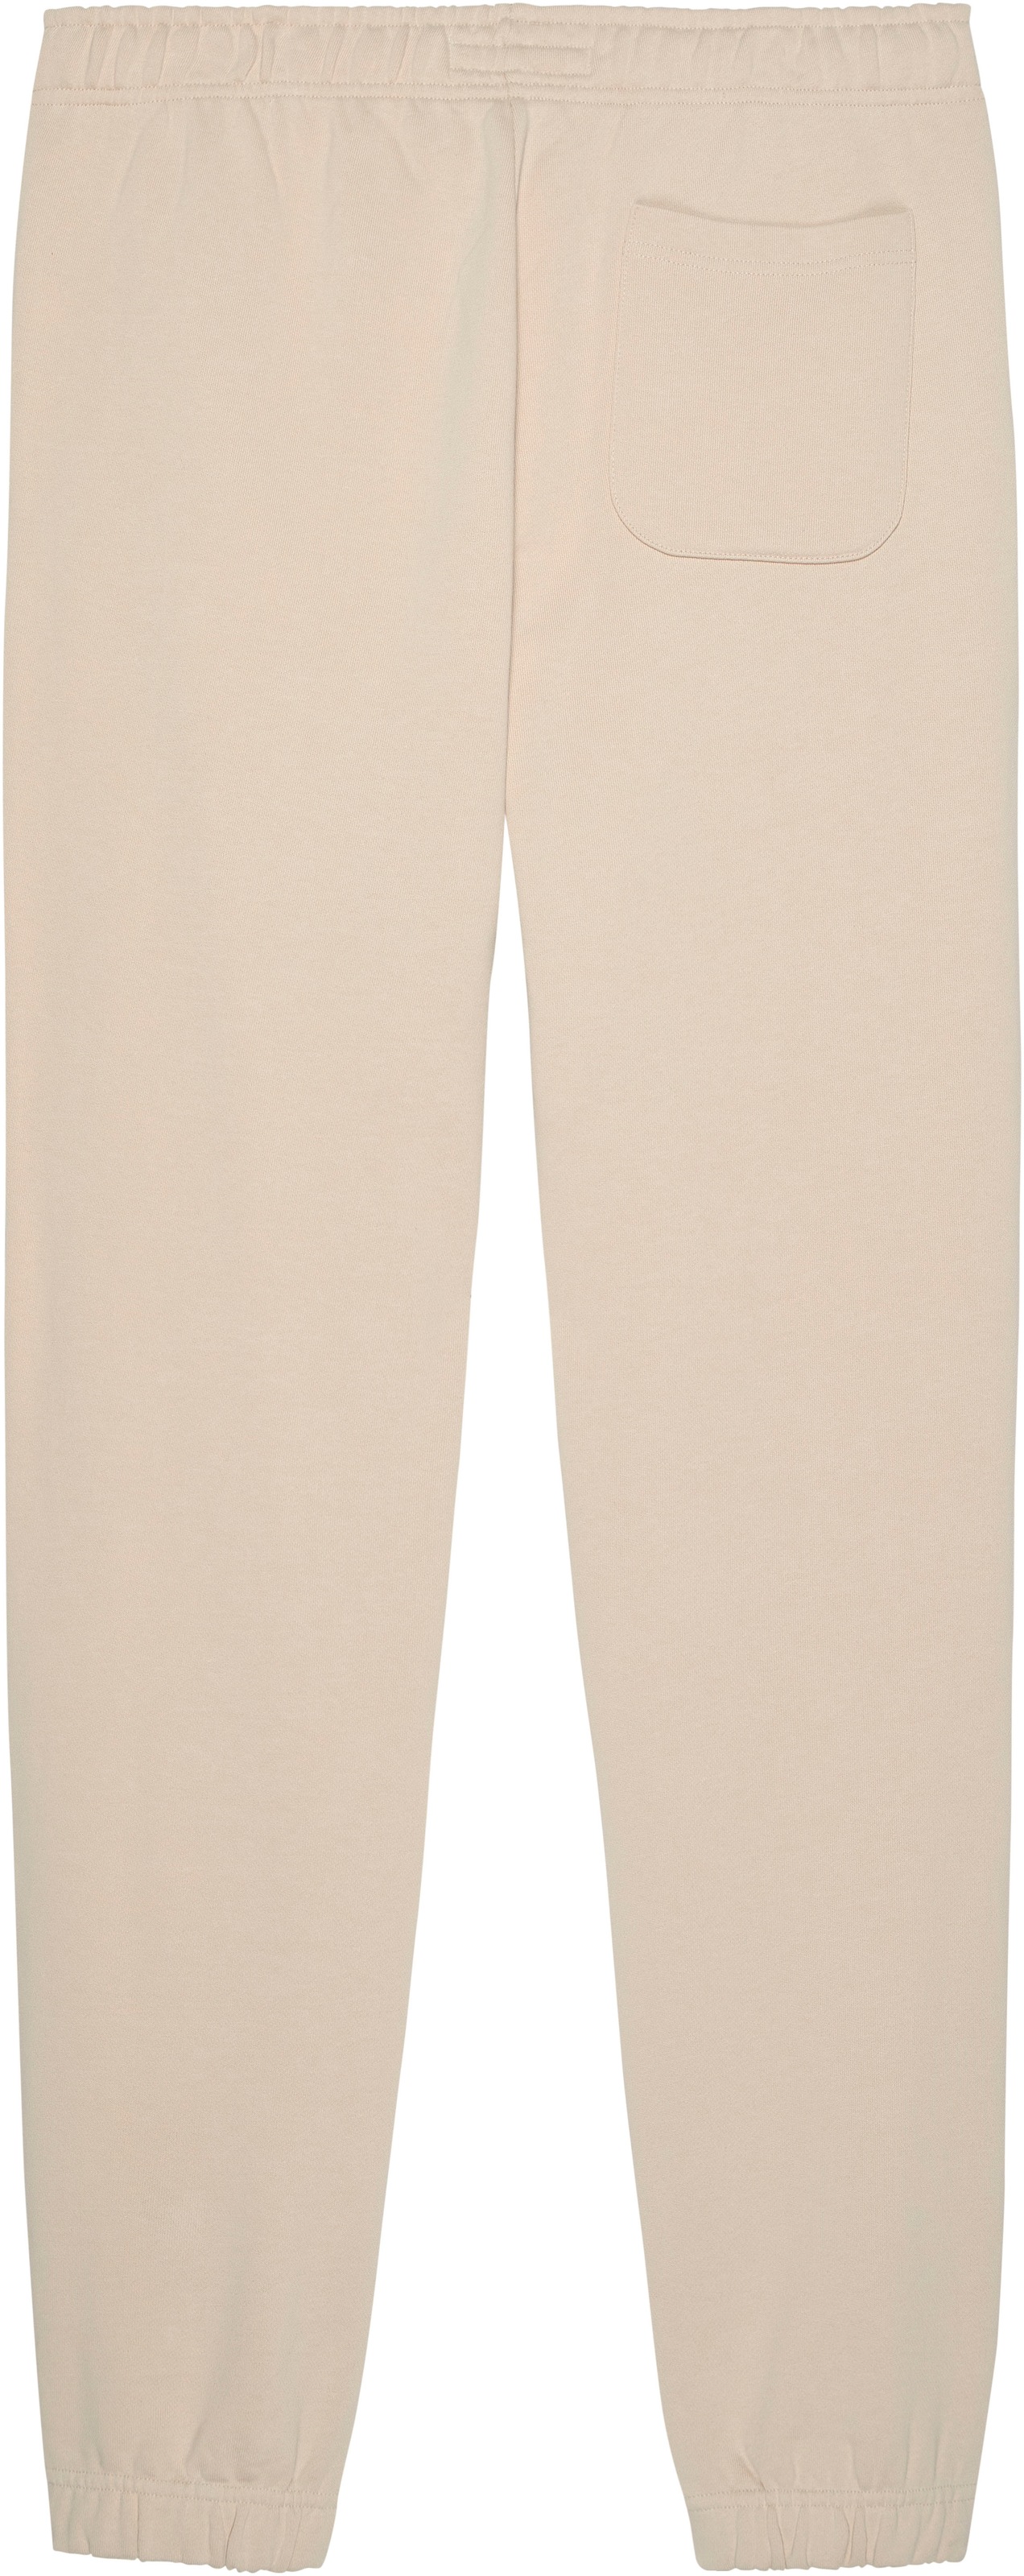 Tommy Jeans Jogginghose »TJM SOLID XS BADGE RLX SWEATPANT«, mit elastischem Bund